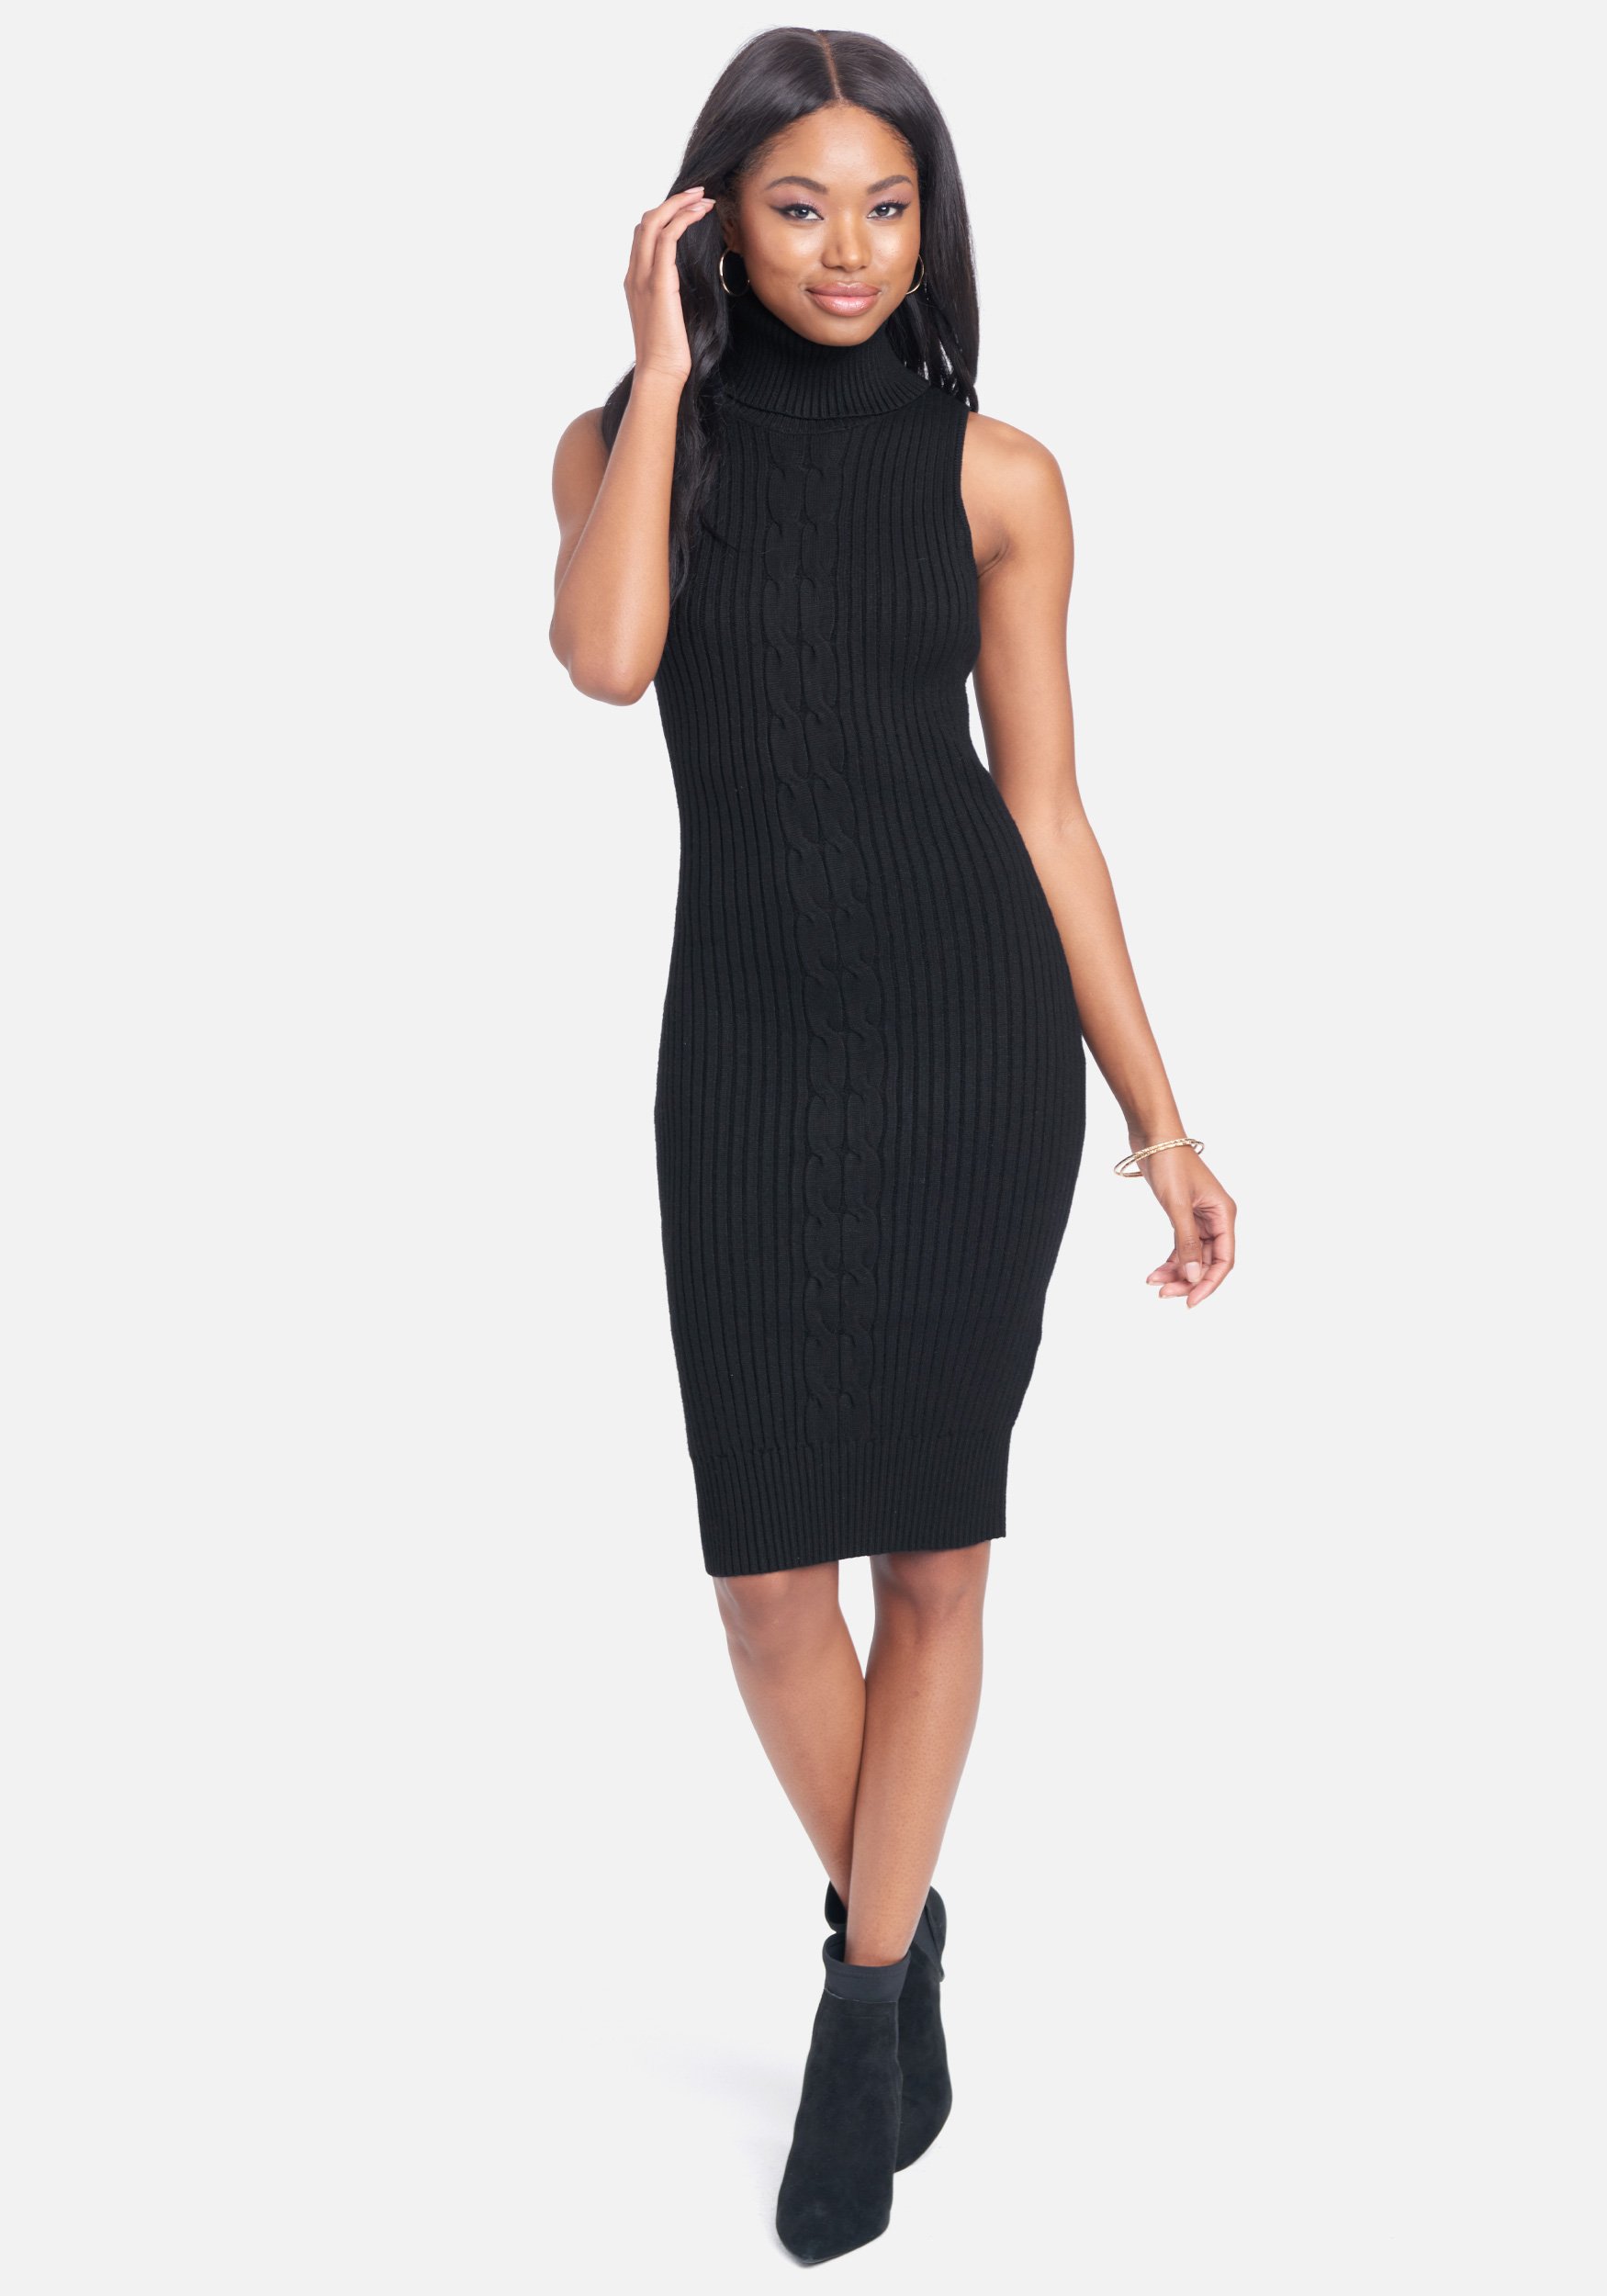 Bebe Women's Knit Cowl Neck Midi Dress, Size Small in Jet Black Viscose